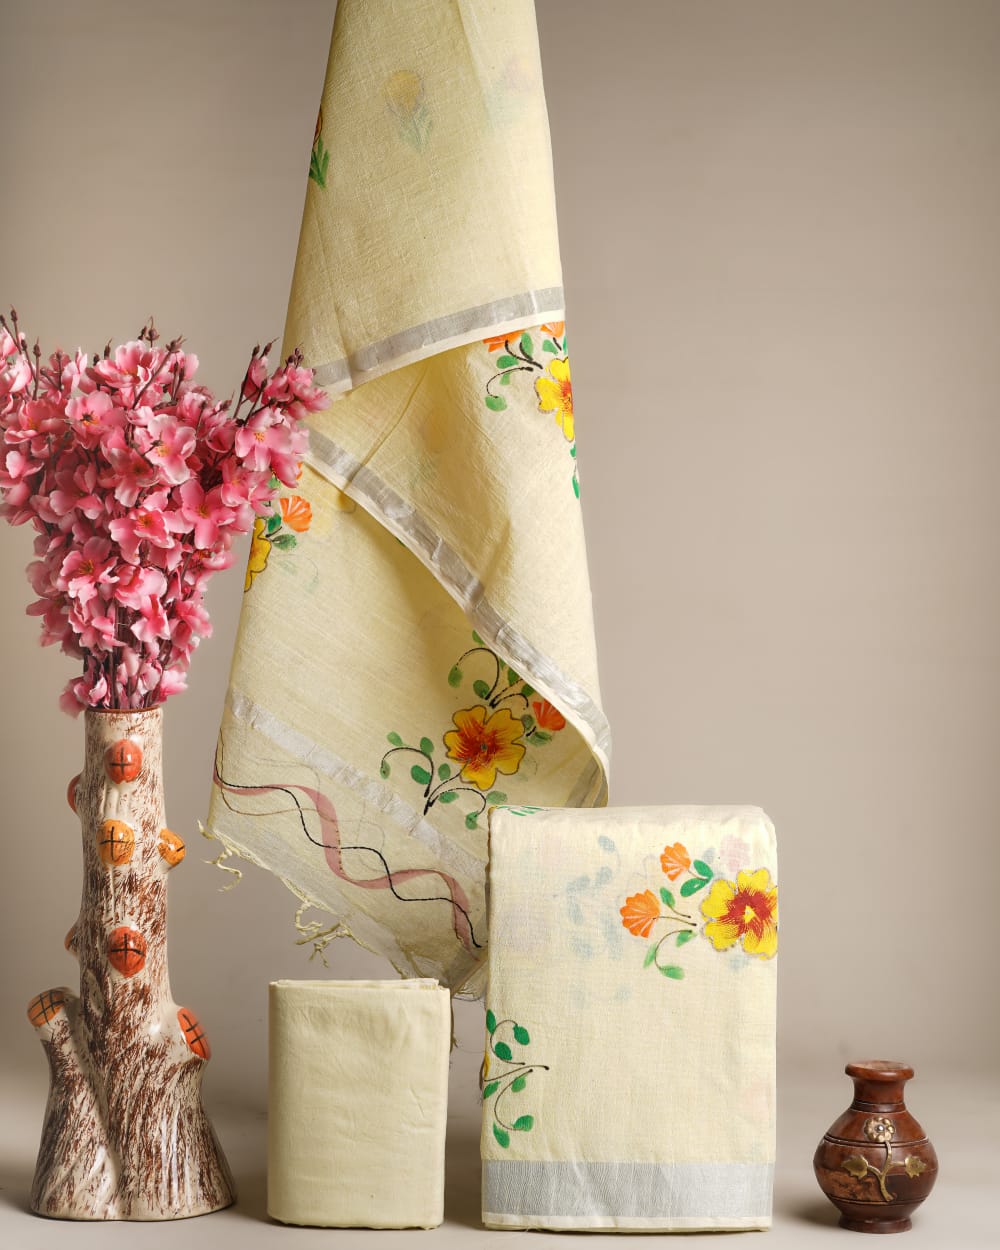 Hand Block Printed Cotton Linen Suit Set With Dupatta